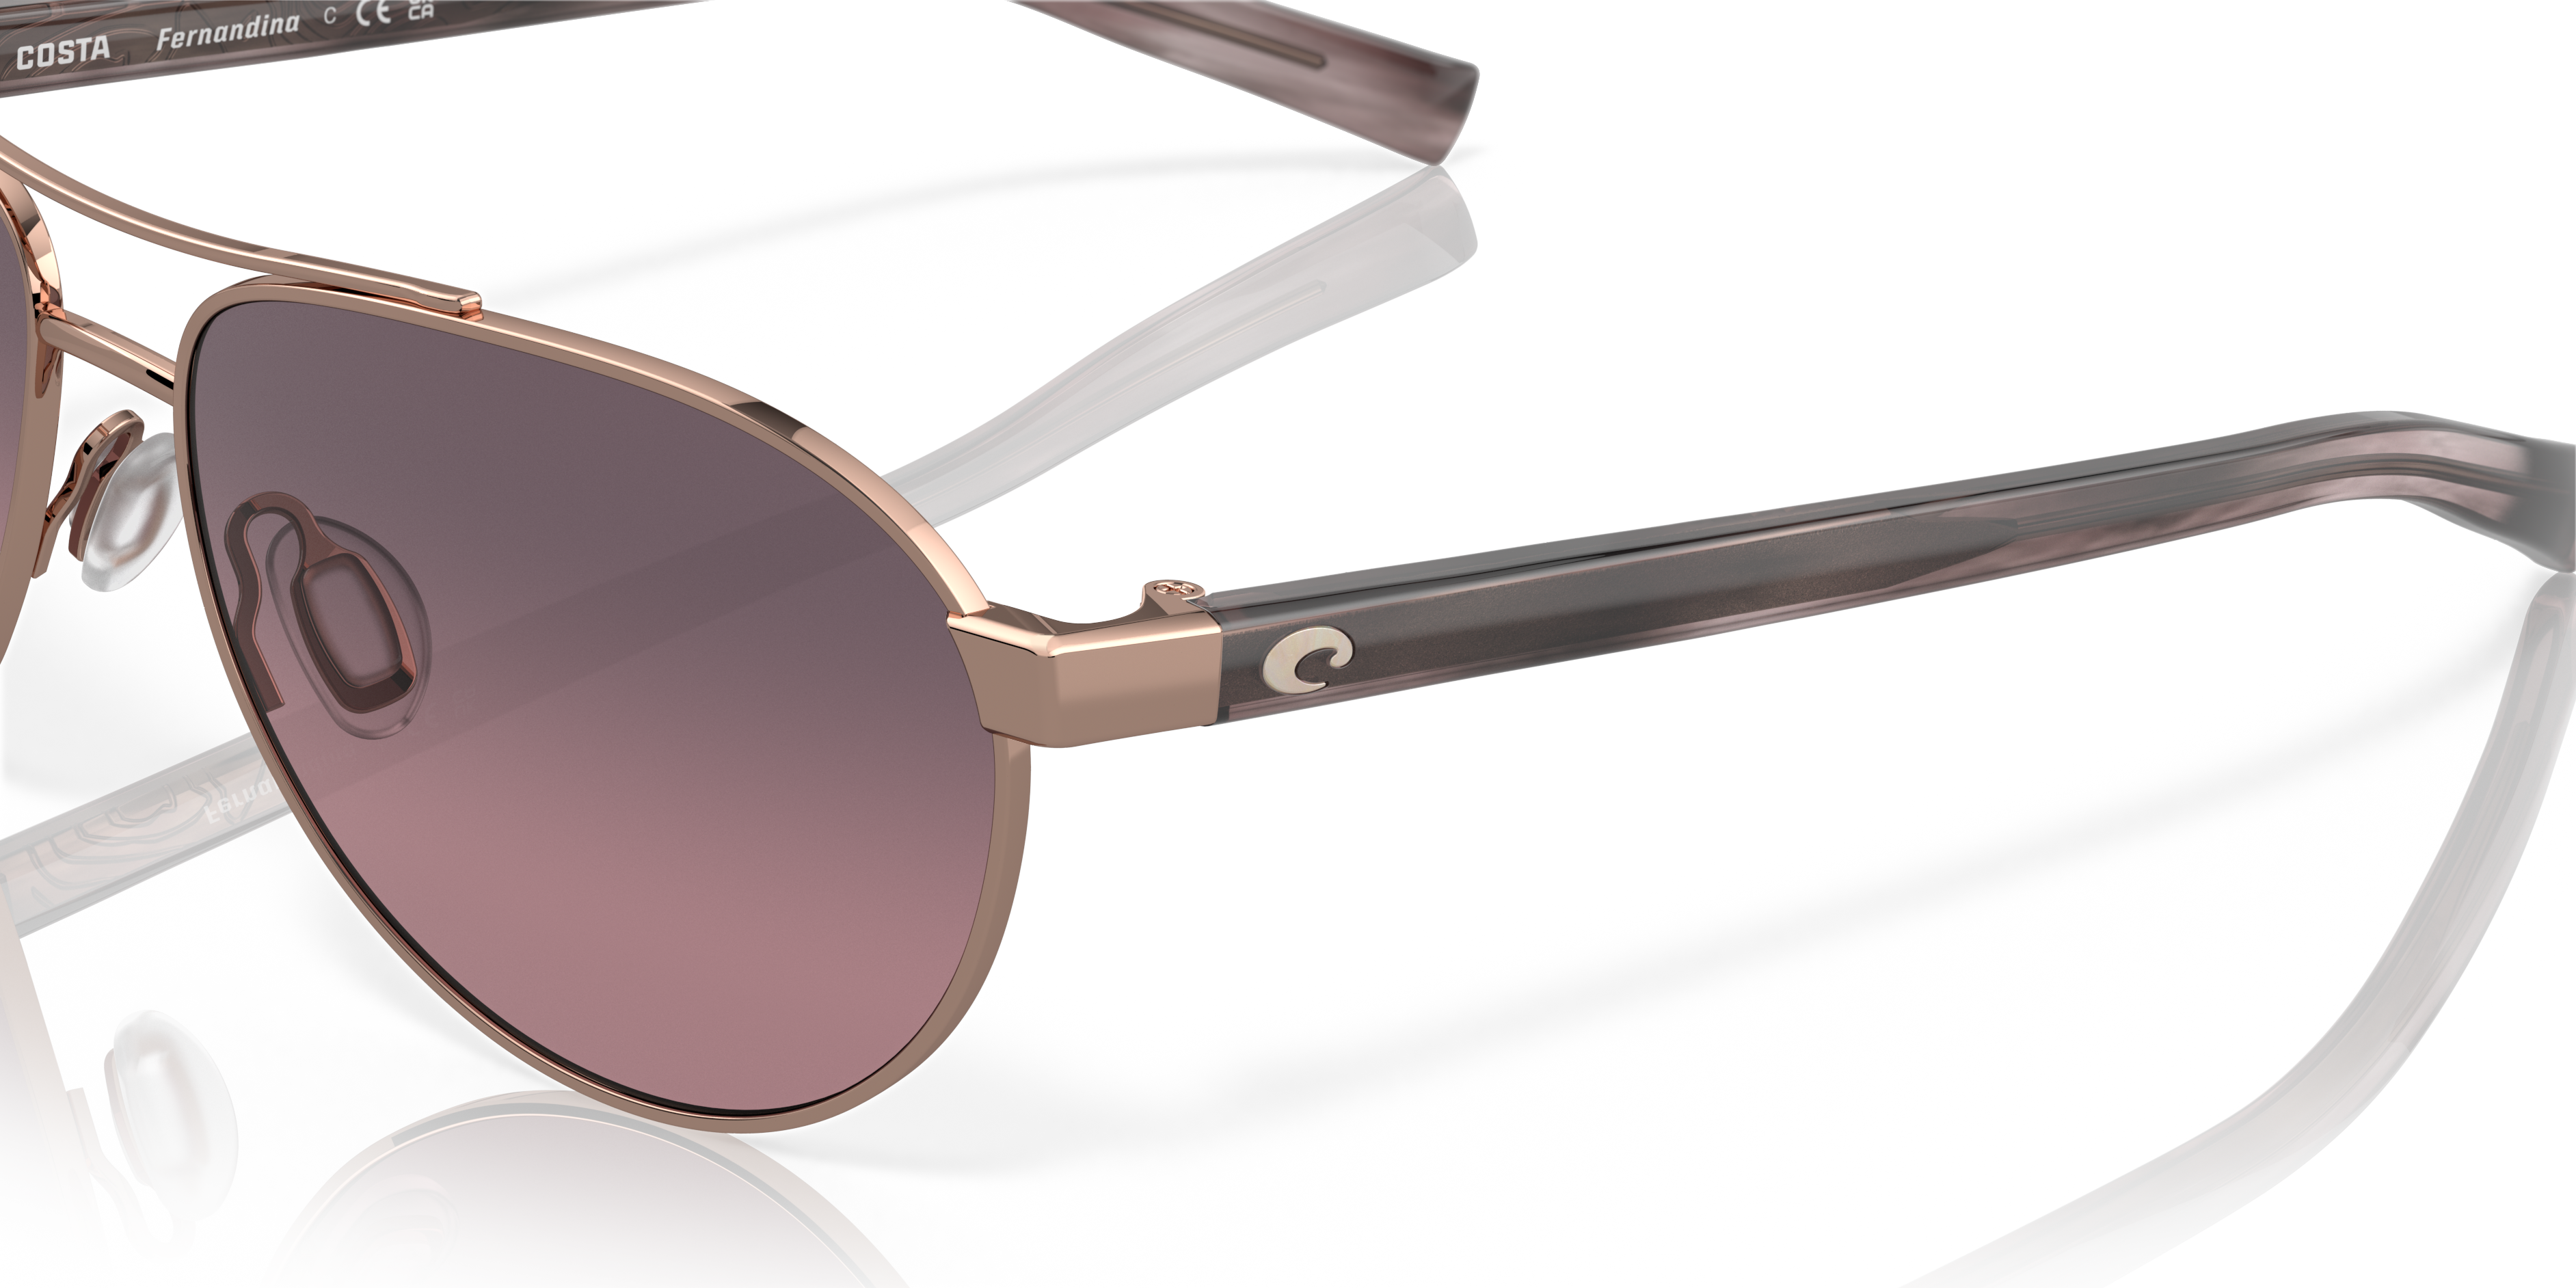 Fernandina Polarized Sunglasses in Rose Gradient | Costa Del Mar®